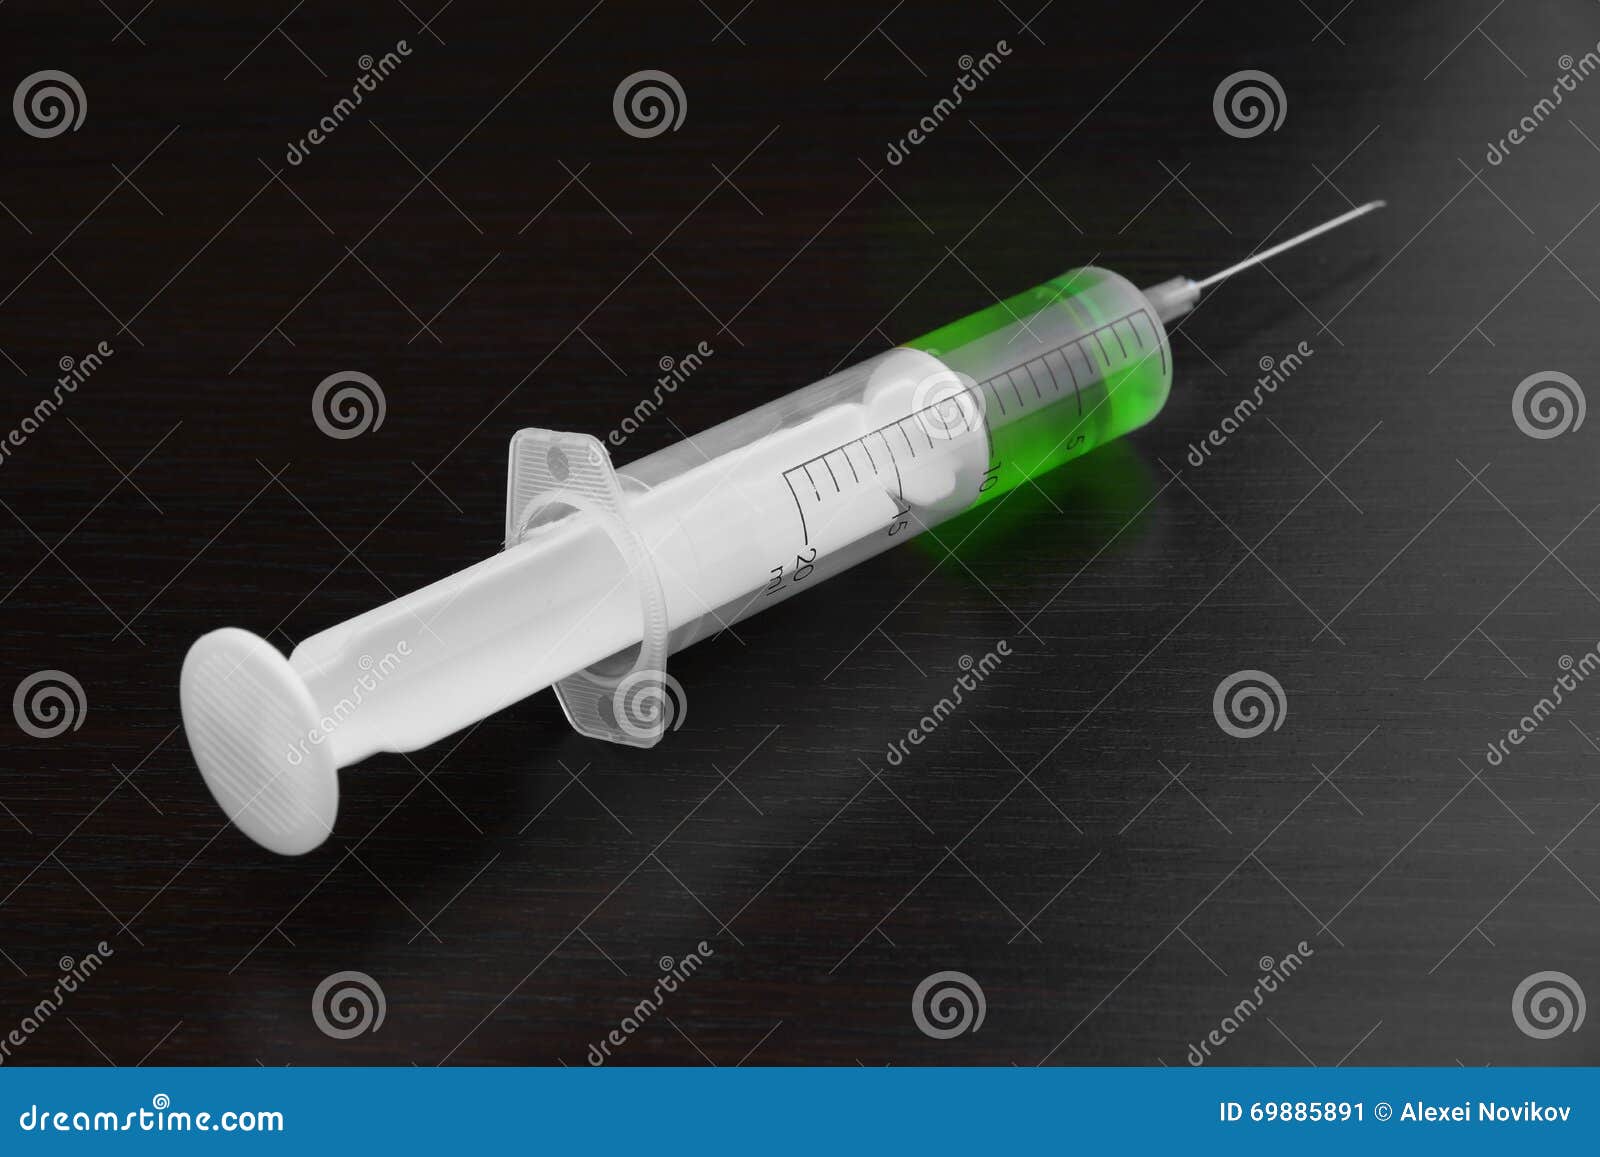 Single Syringe With Green Liquid On The Black Wood Background Stock